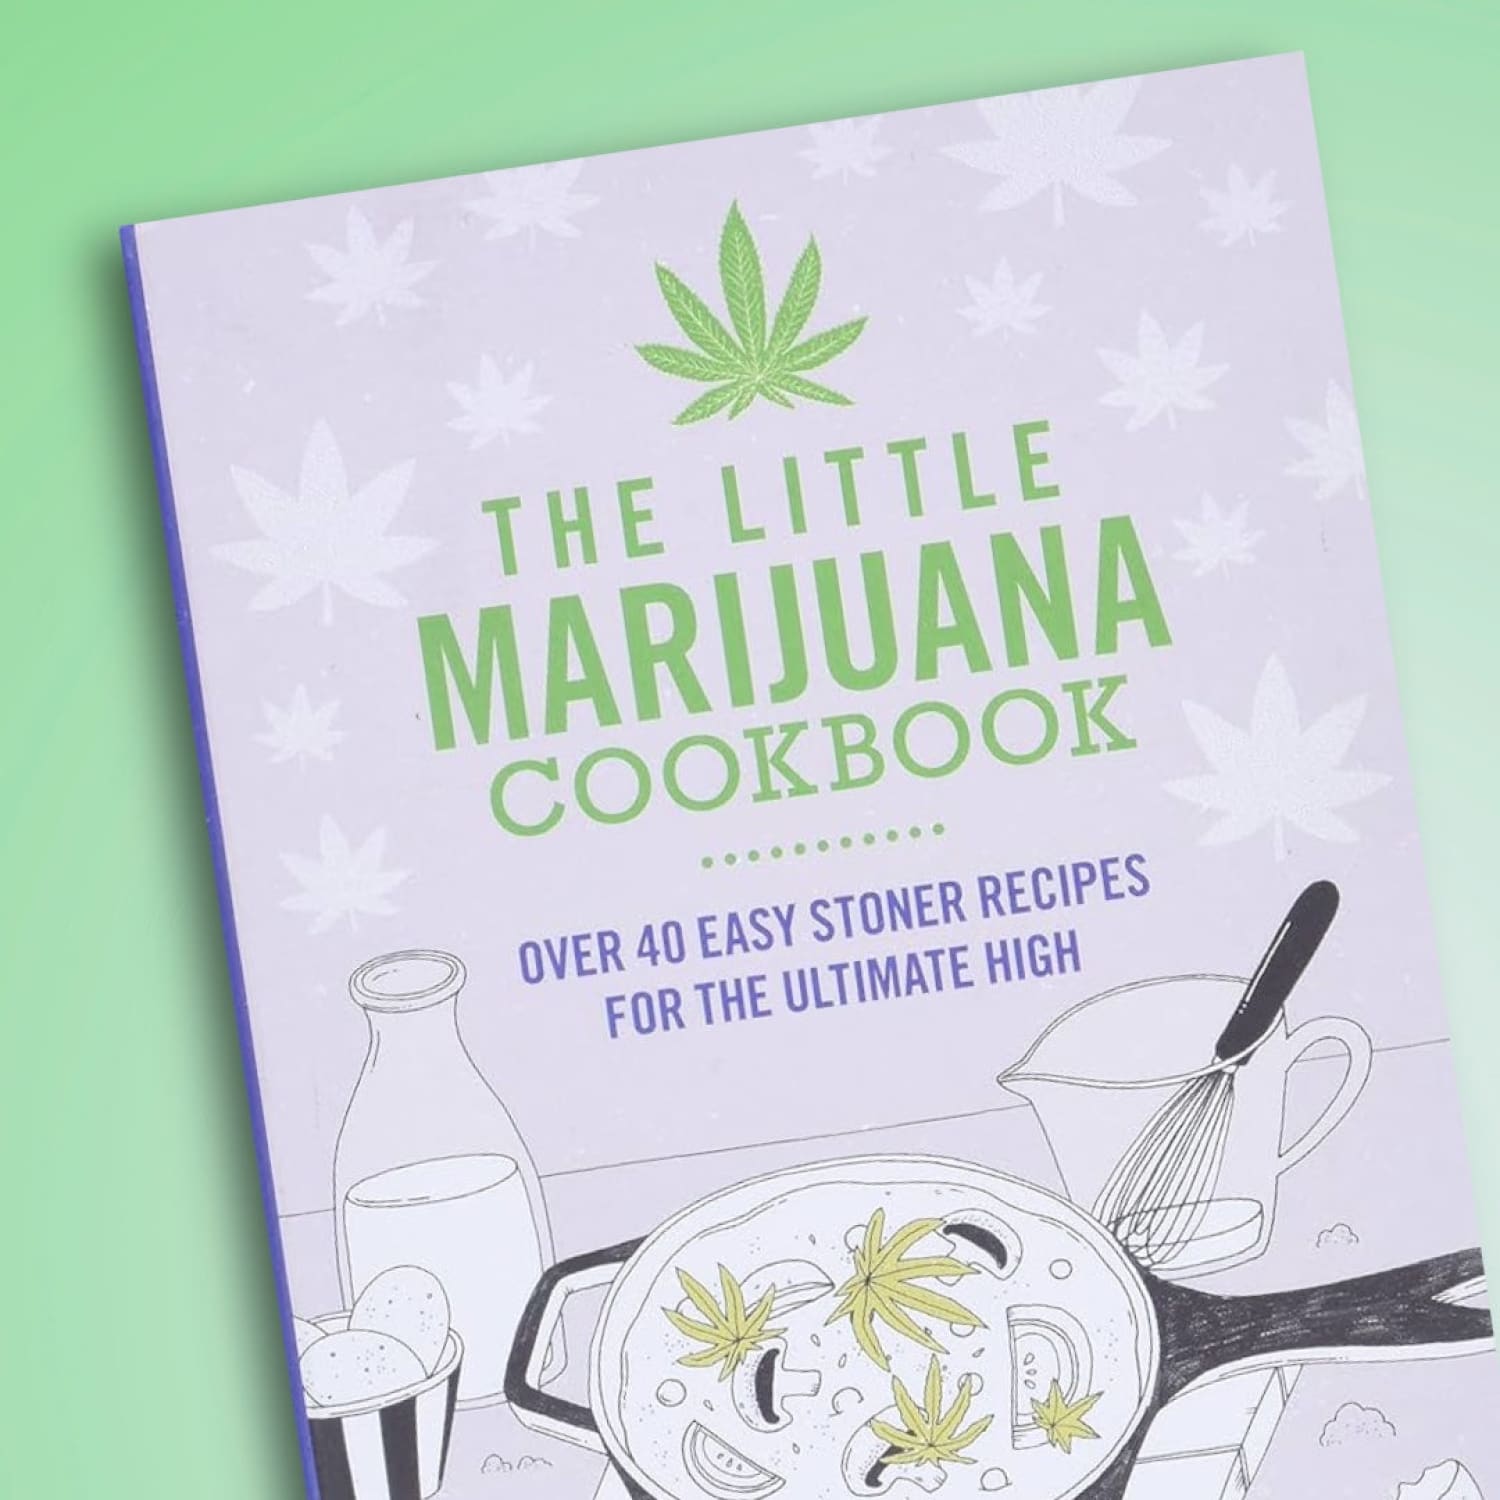 The Little Marijuana Cookbook 0923 - Q323 - Table1080423 -